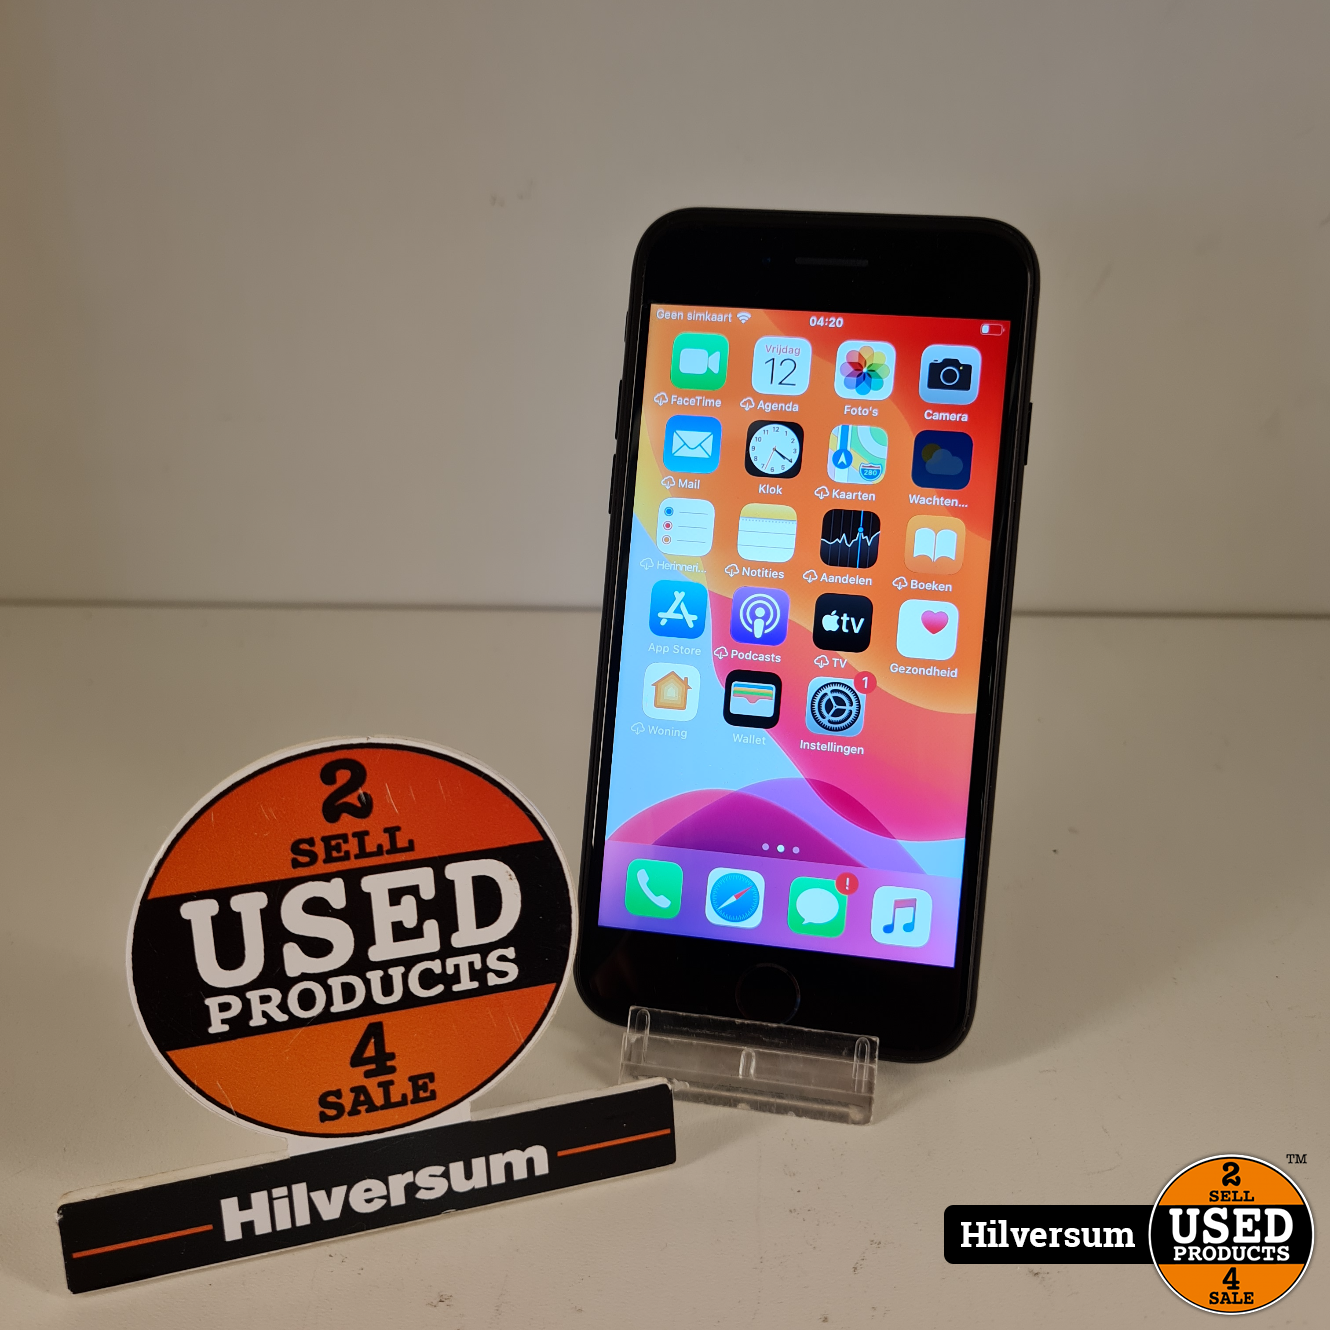 Humaan breken dennenboom Apple iPhone 7 32GB Jetblack - Used Products Hilversum